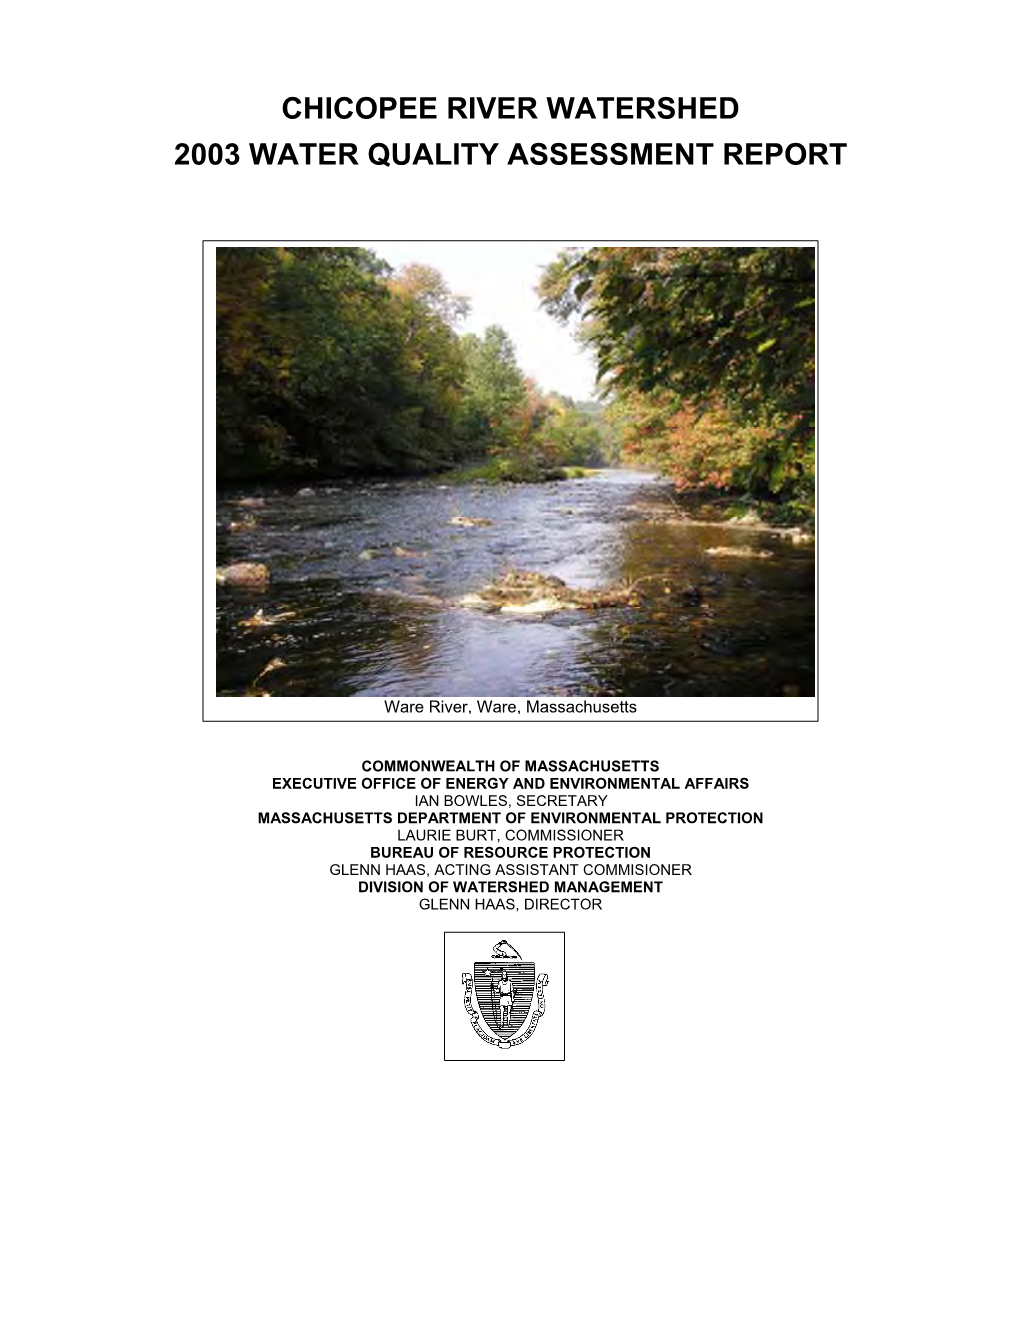 Chicopee River Watershed 2003 Water Quality Technical Memorandum (TM36-3)